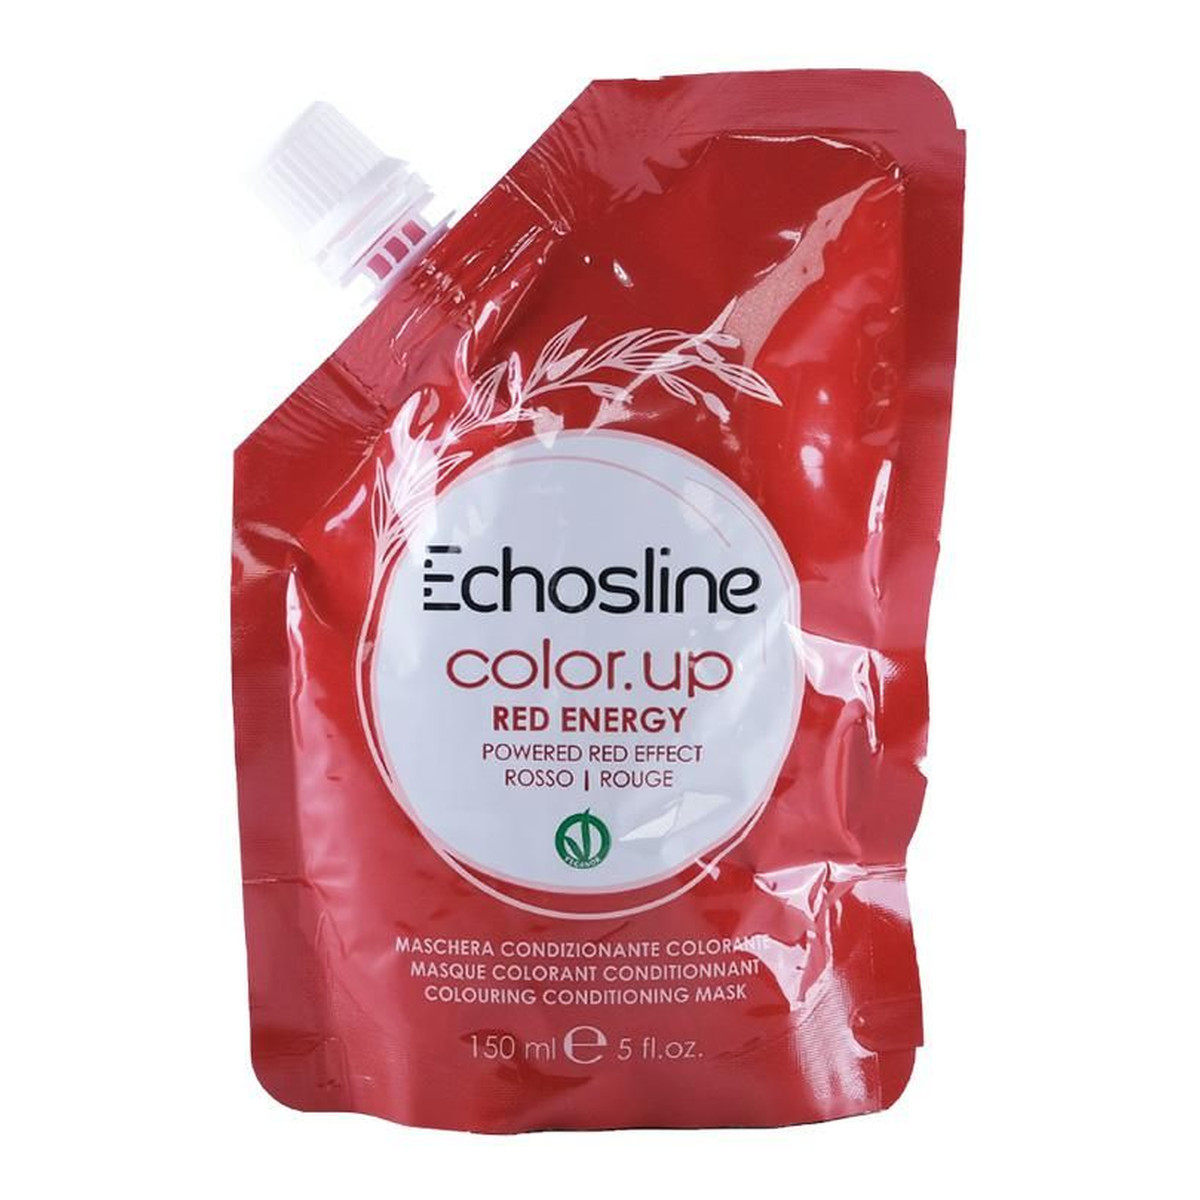 Echosline Color.up colouring conditioning mask maska koloryzująca do włosów red energy 150ml